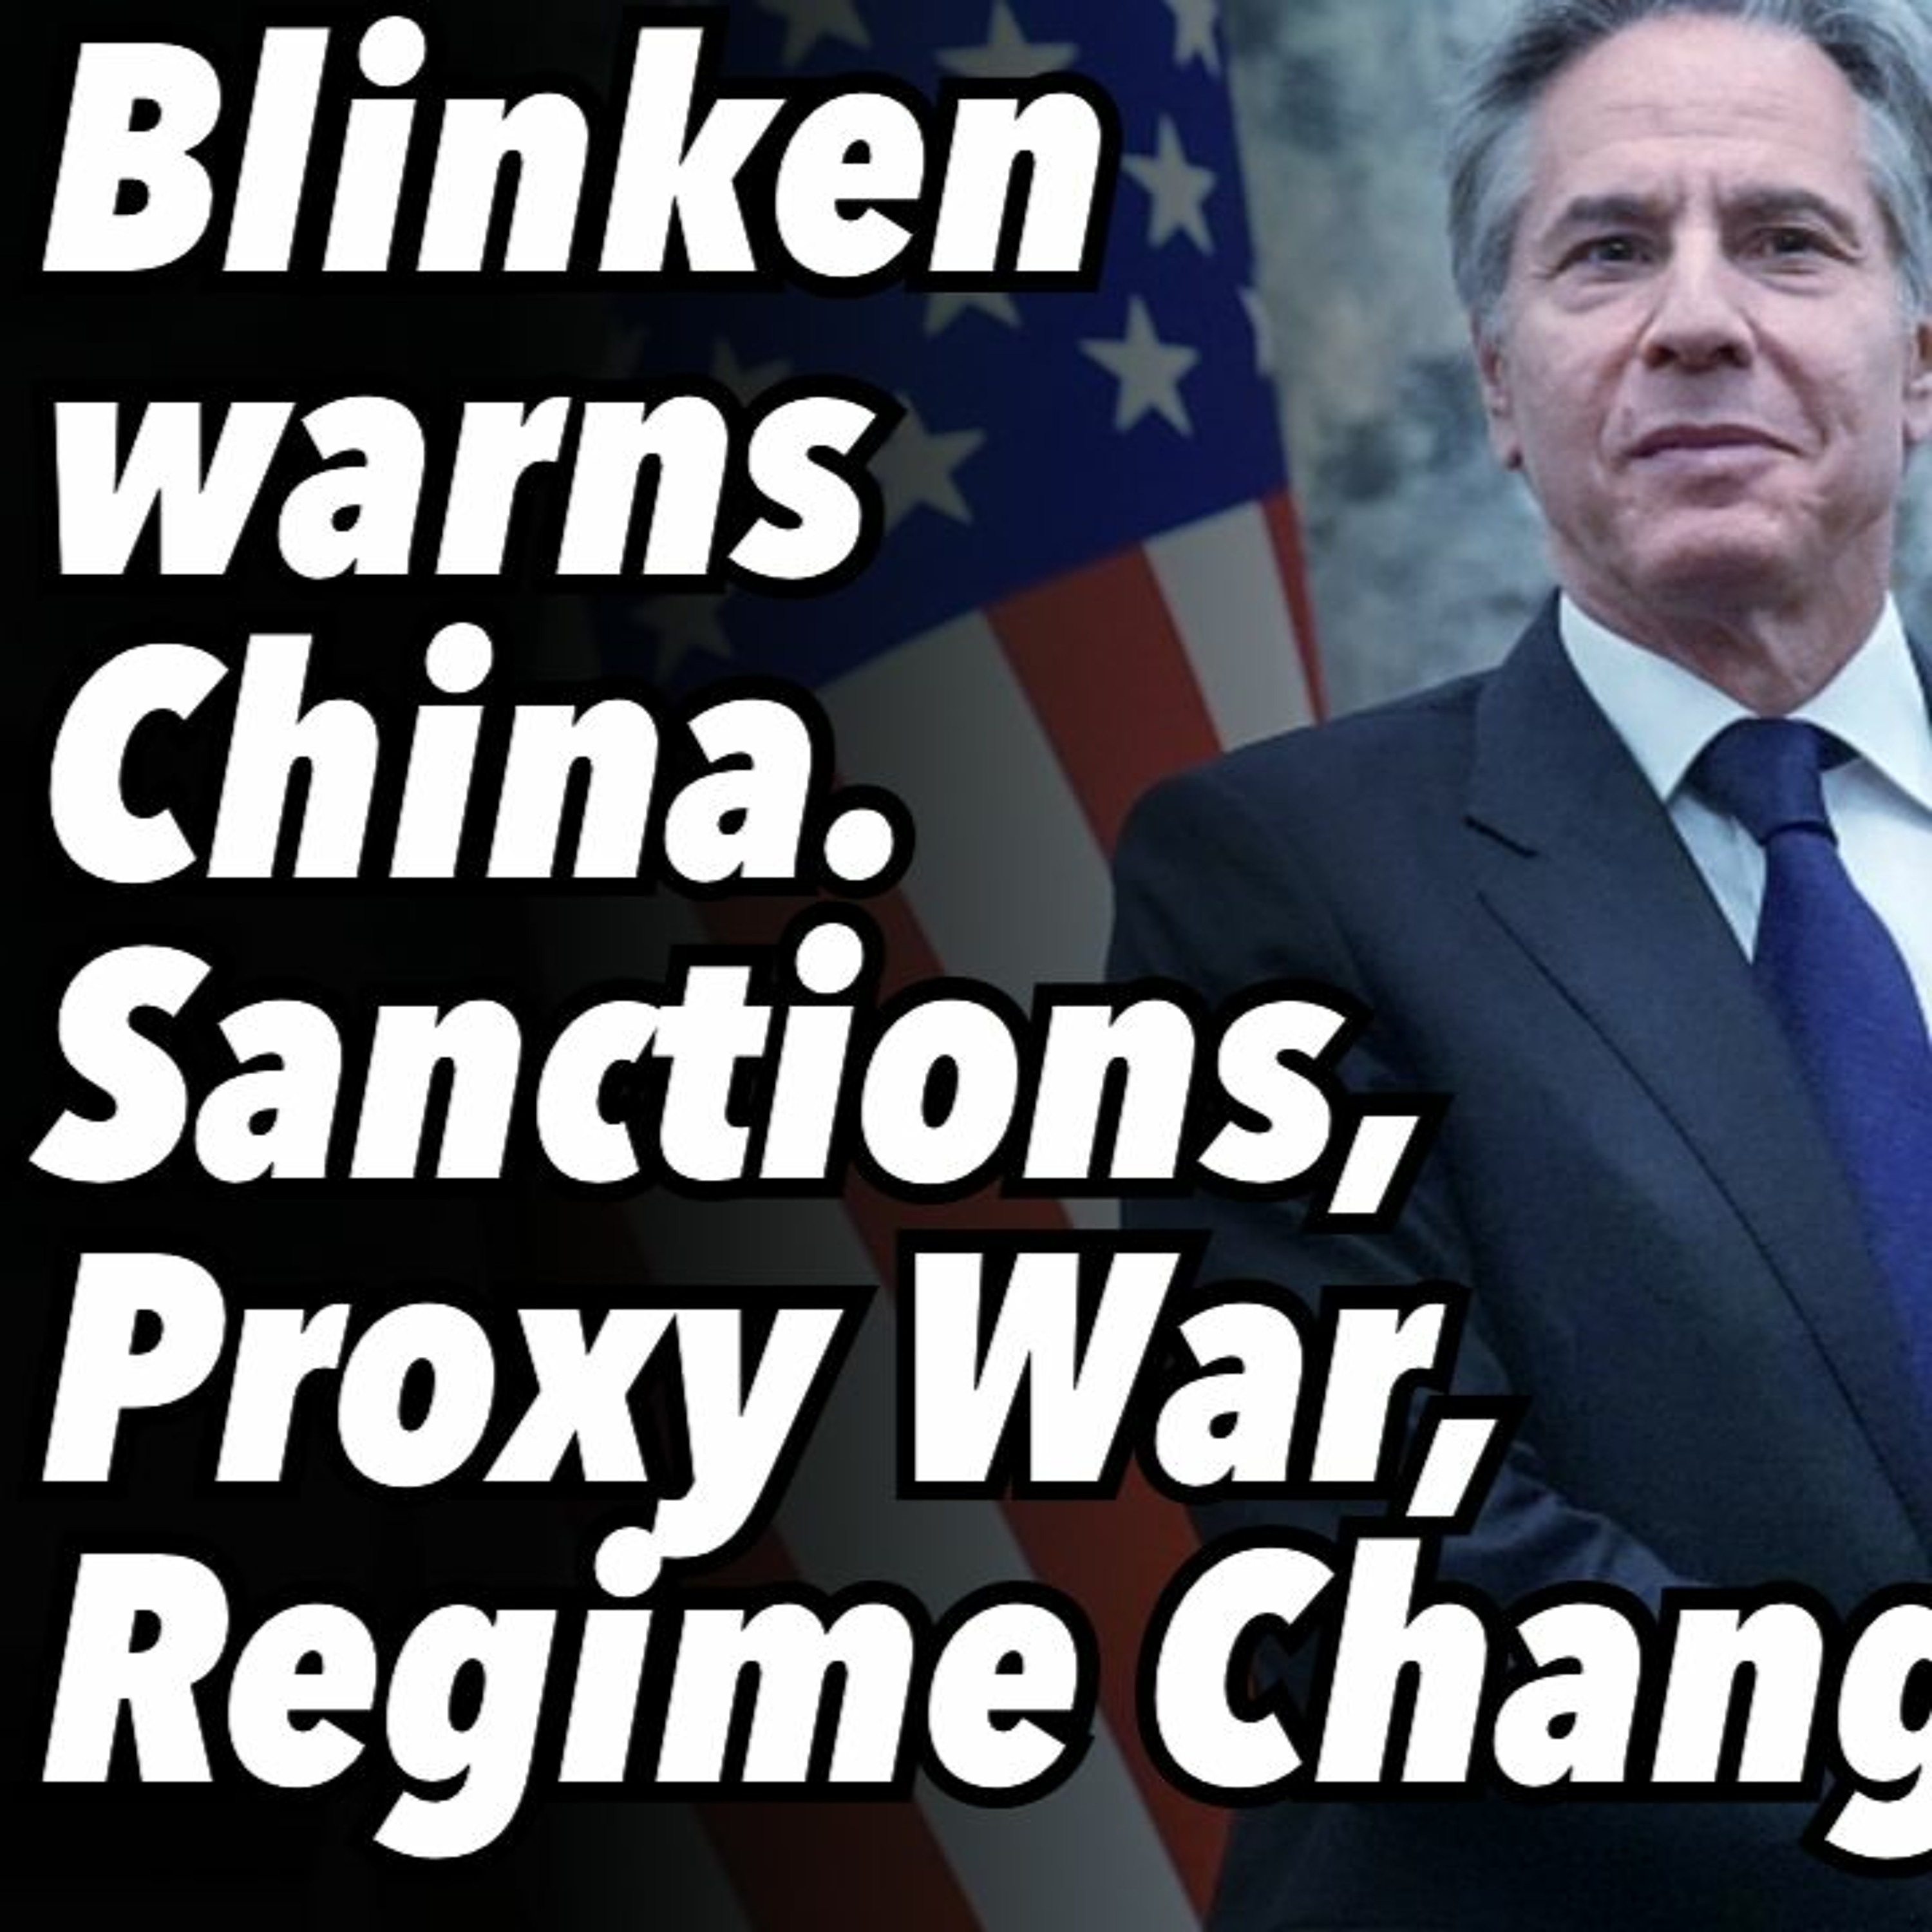 Blinken warns China. Sanctions, Proxy War and Regime Change